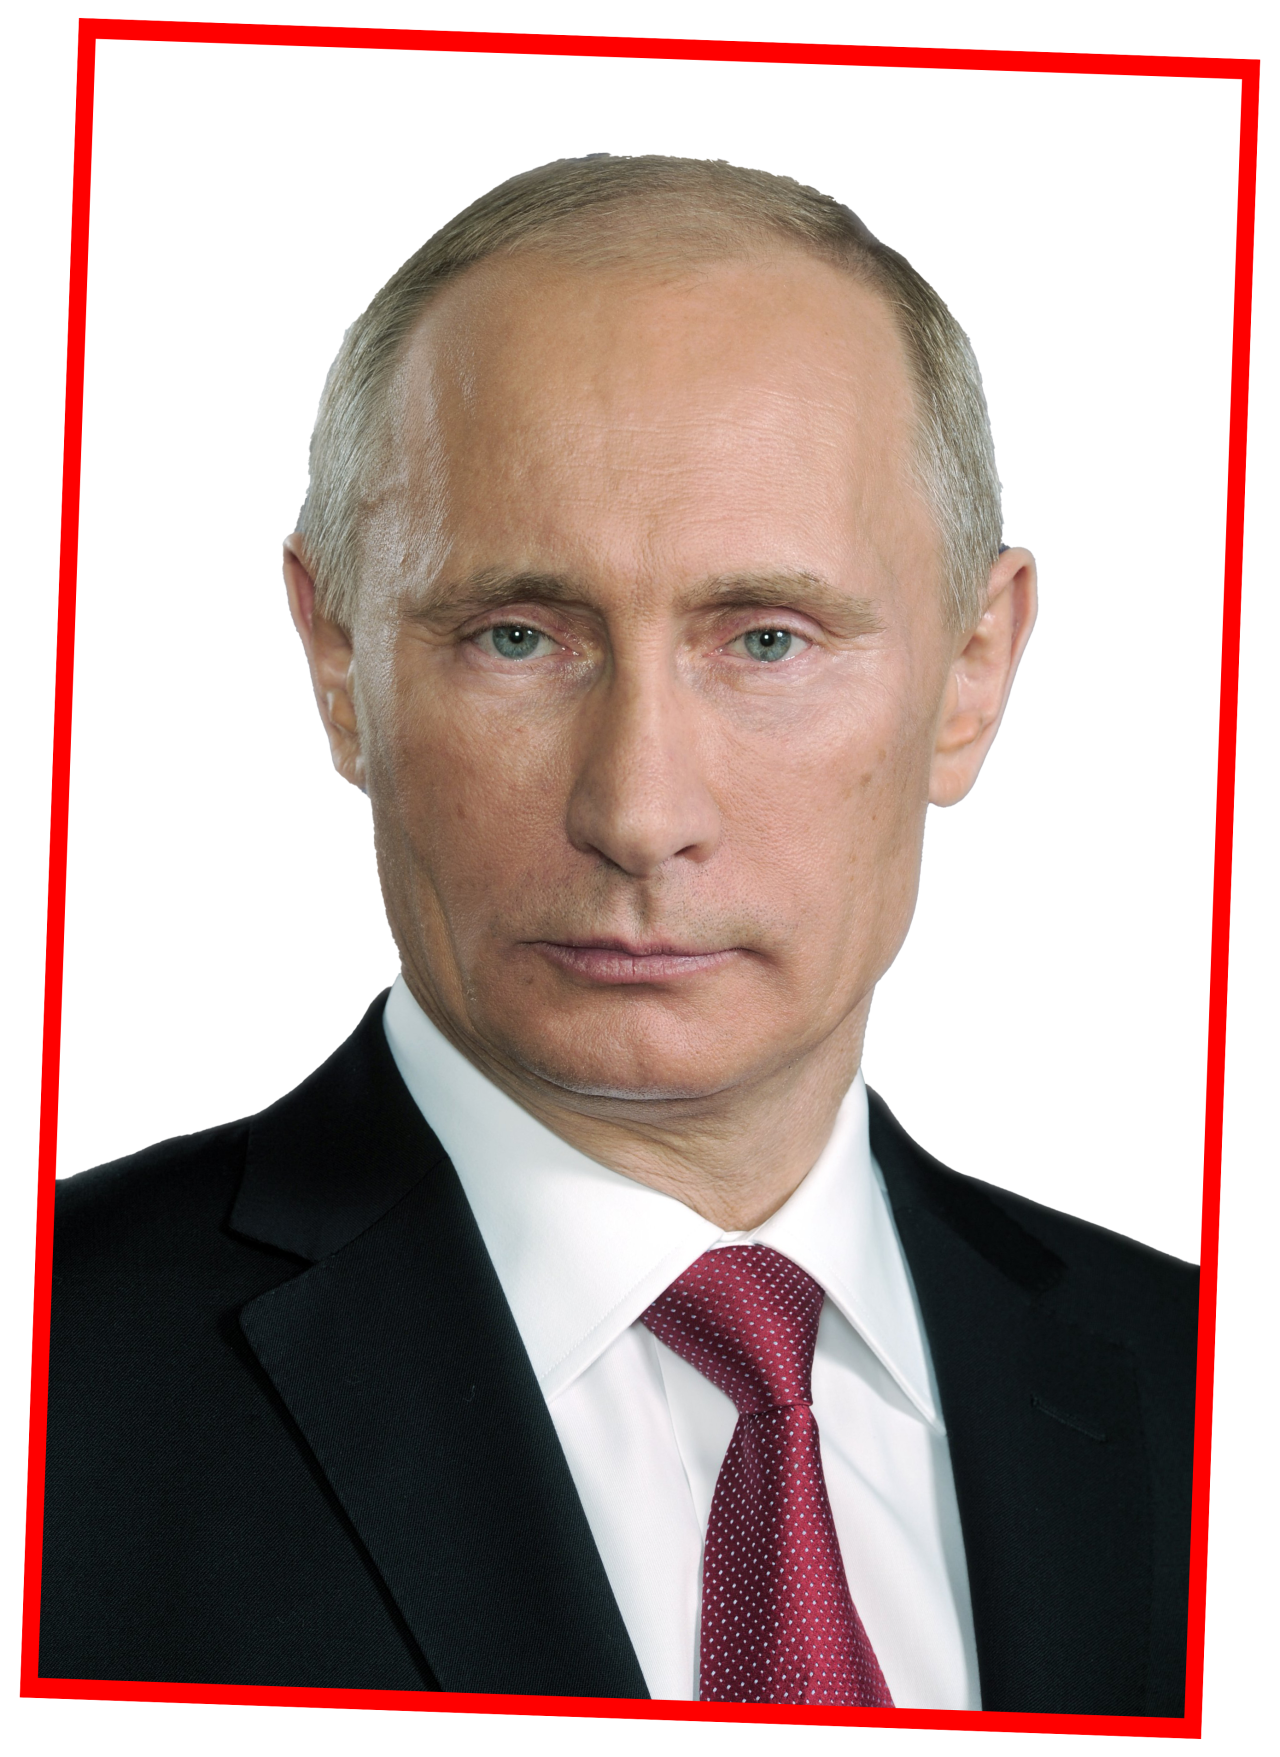 Portrett av Russlands president Vladimir Putin